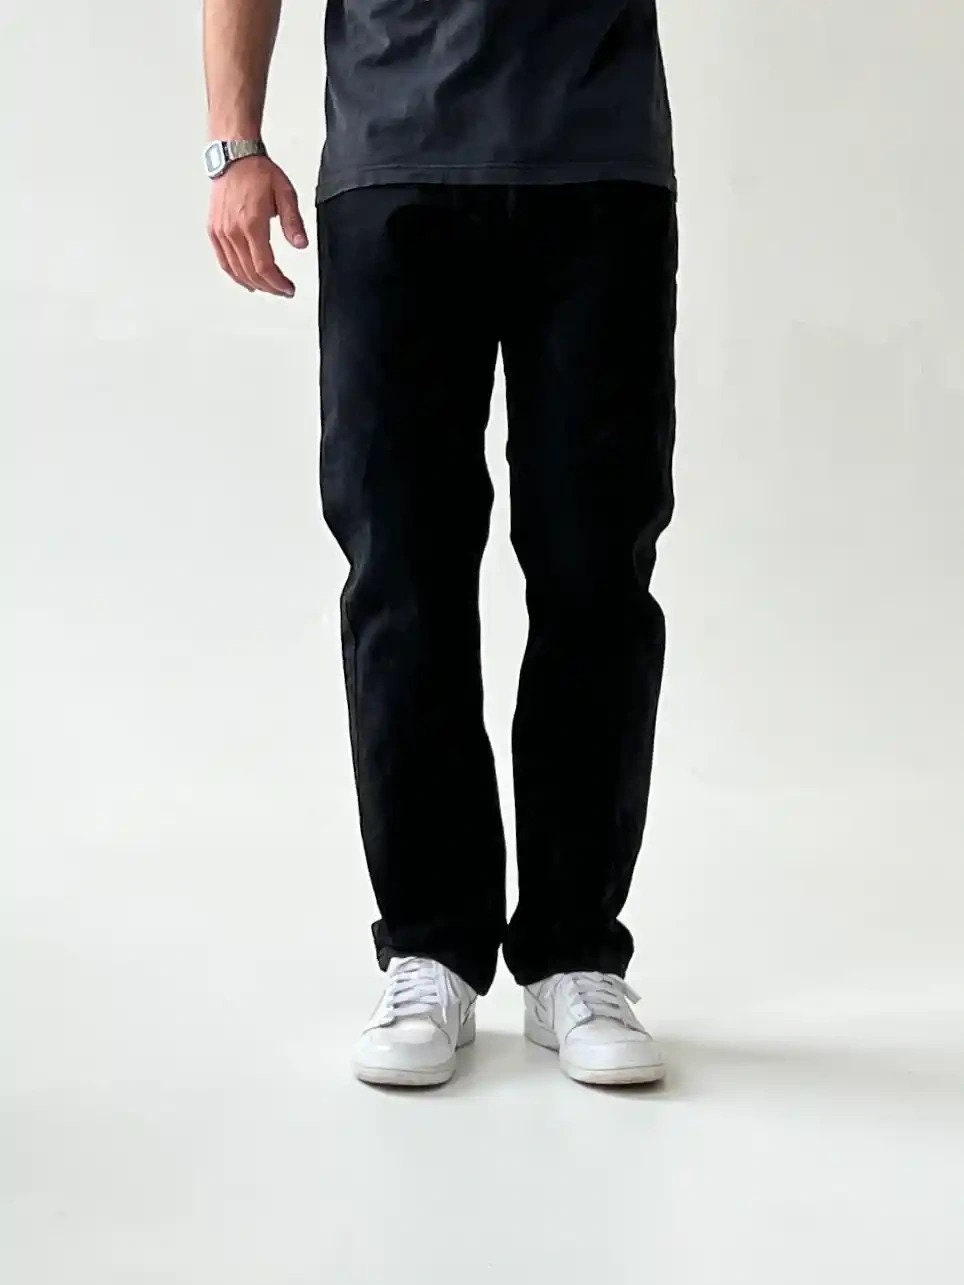 Carhartt WIP W' Kay Pant 27x32 Jeans